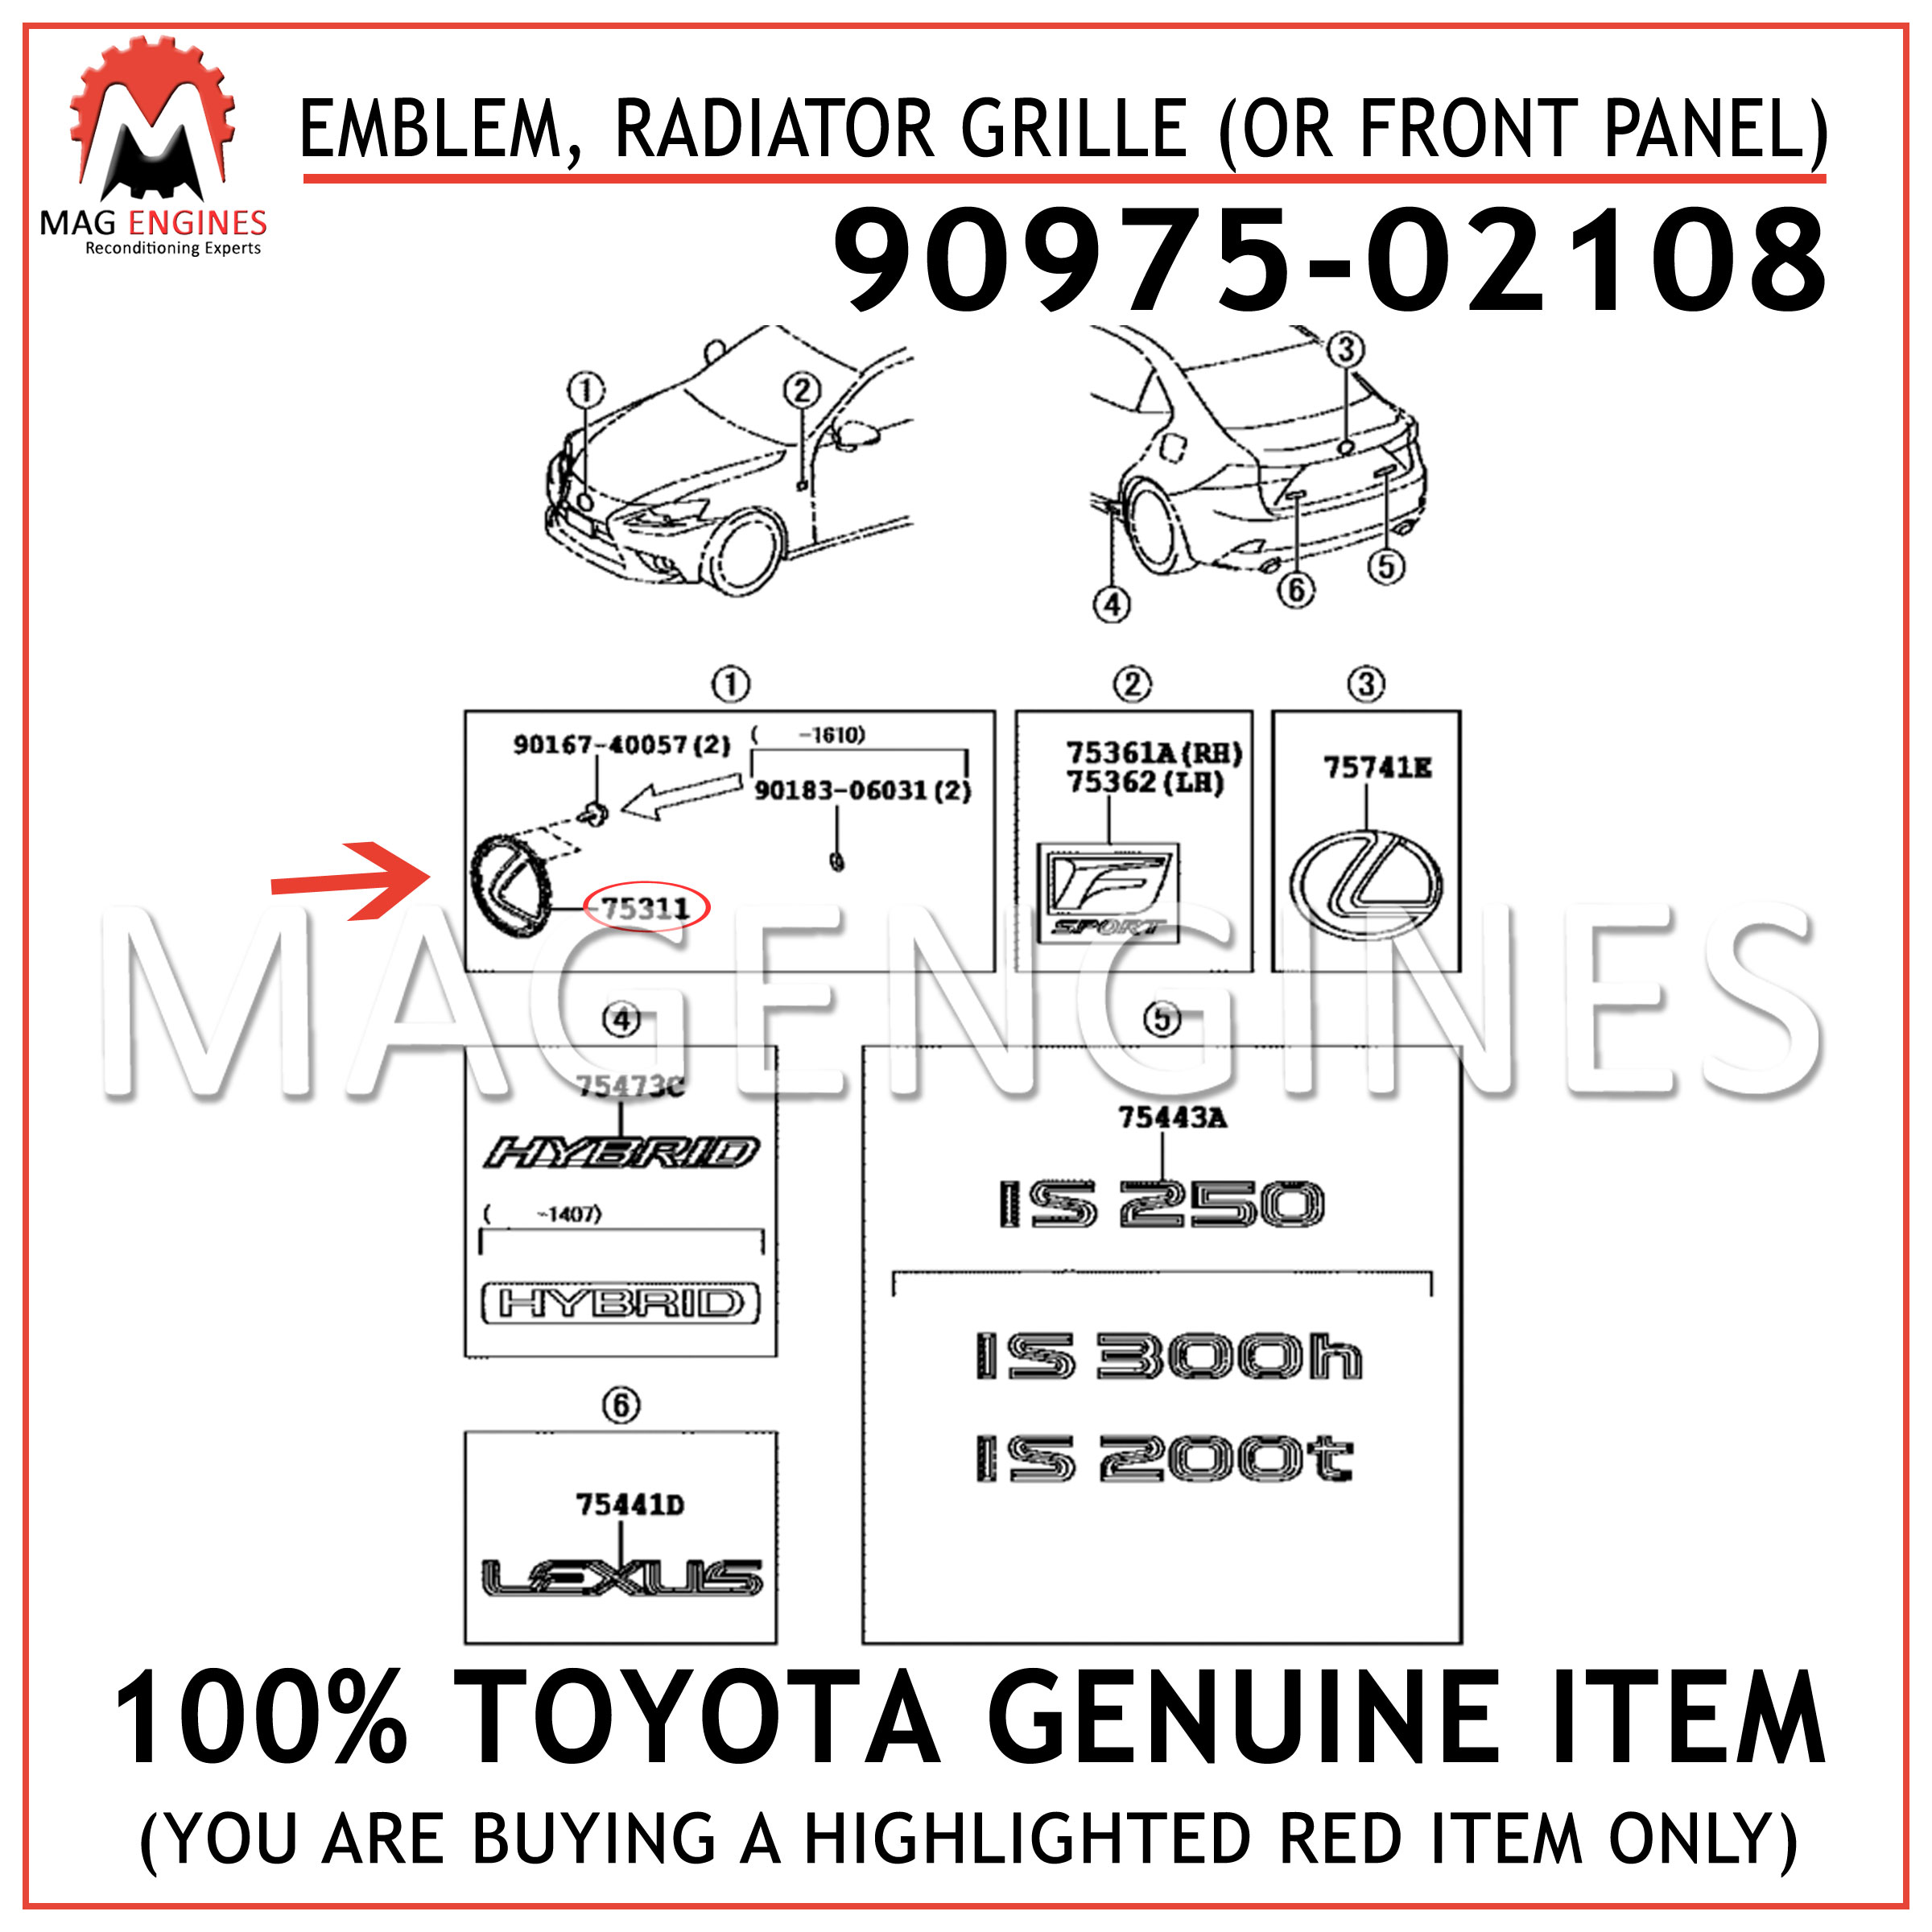 radiator grille New Genu 90975-02188 Toyota Emblem or front panel 9097502188